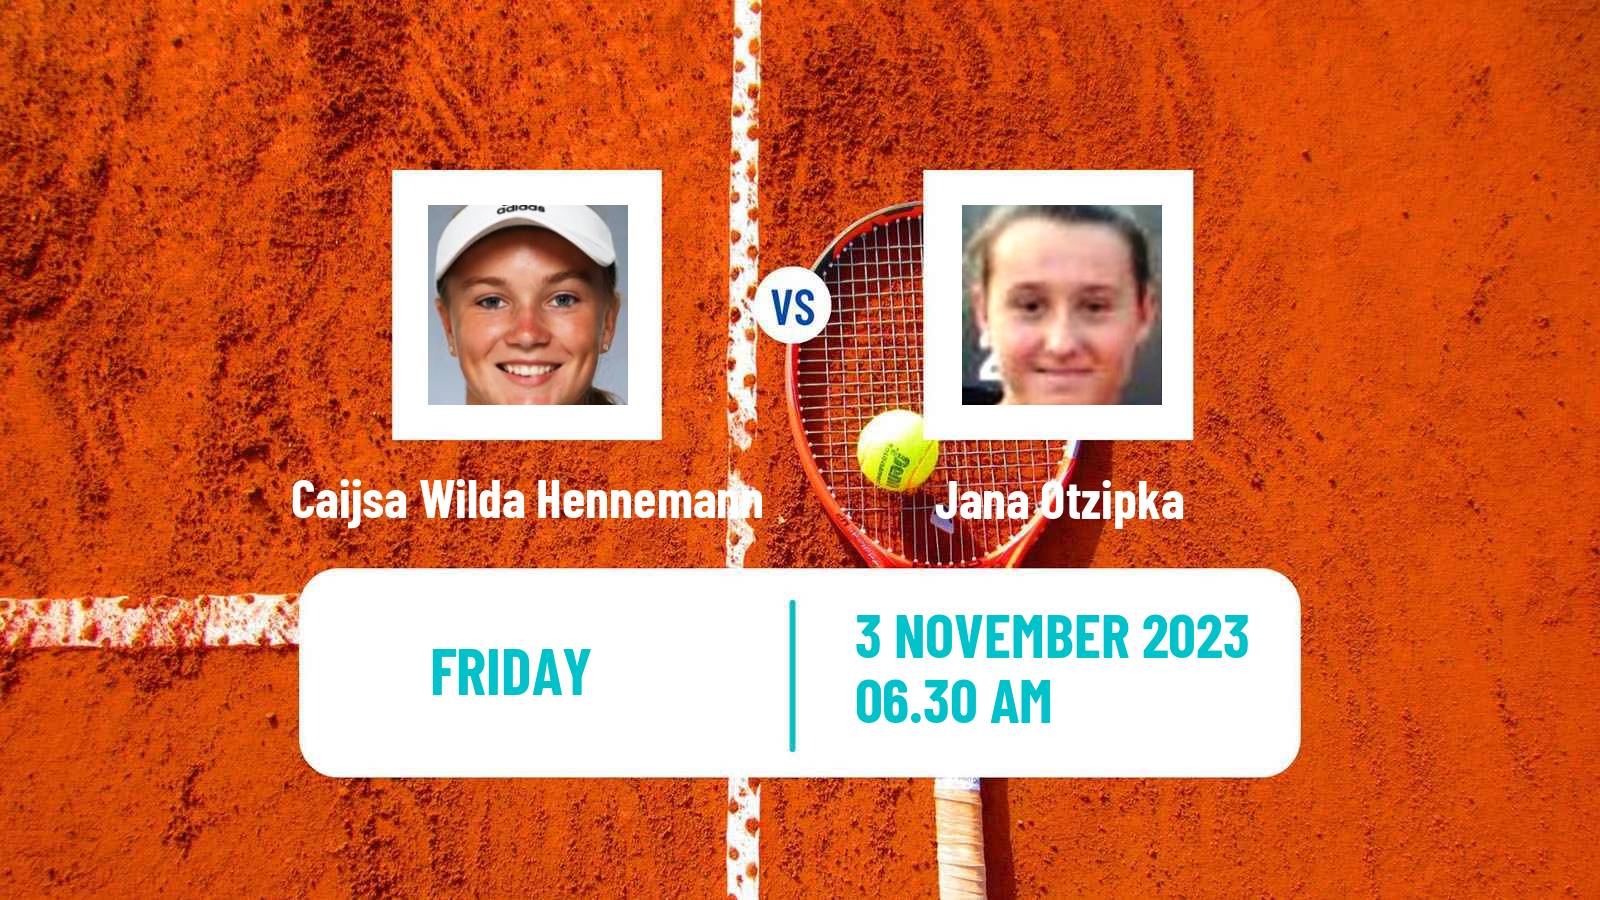 Tennis ITF W15 Nasbypark Women Caijsa Wilda Hennemann - Jana Otzipka